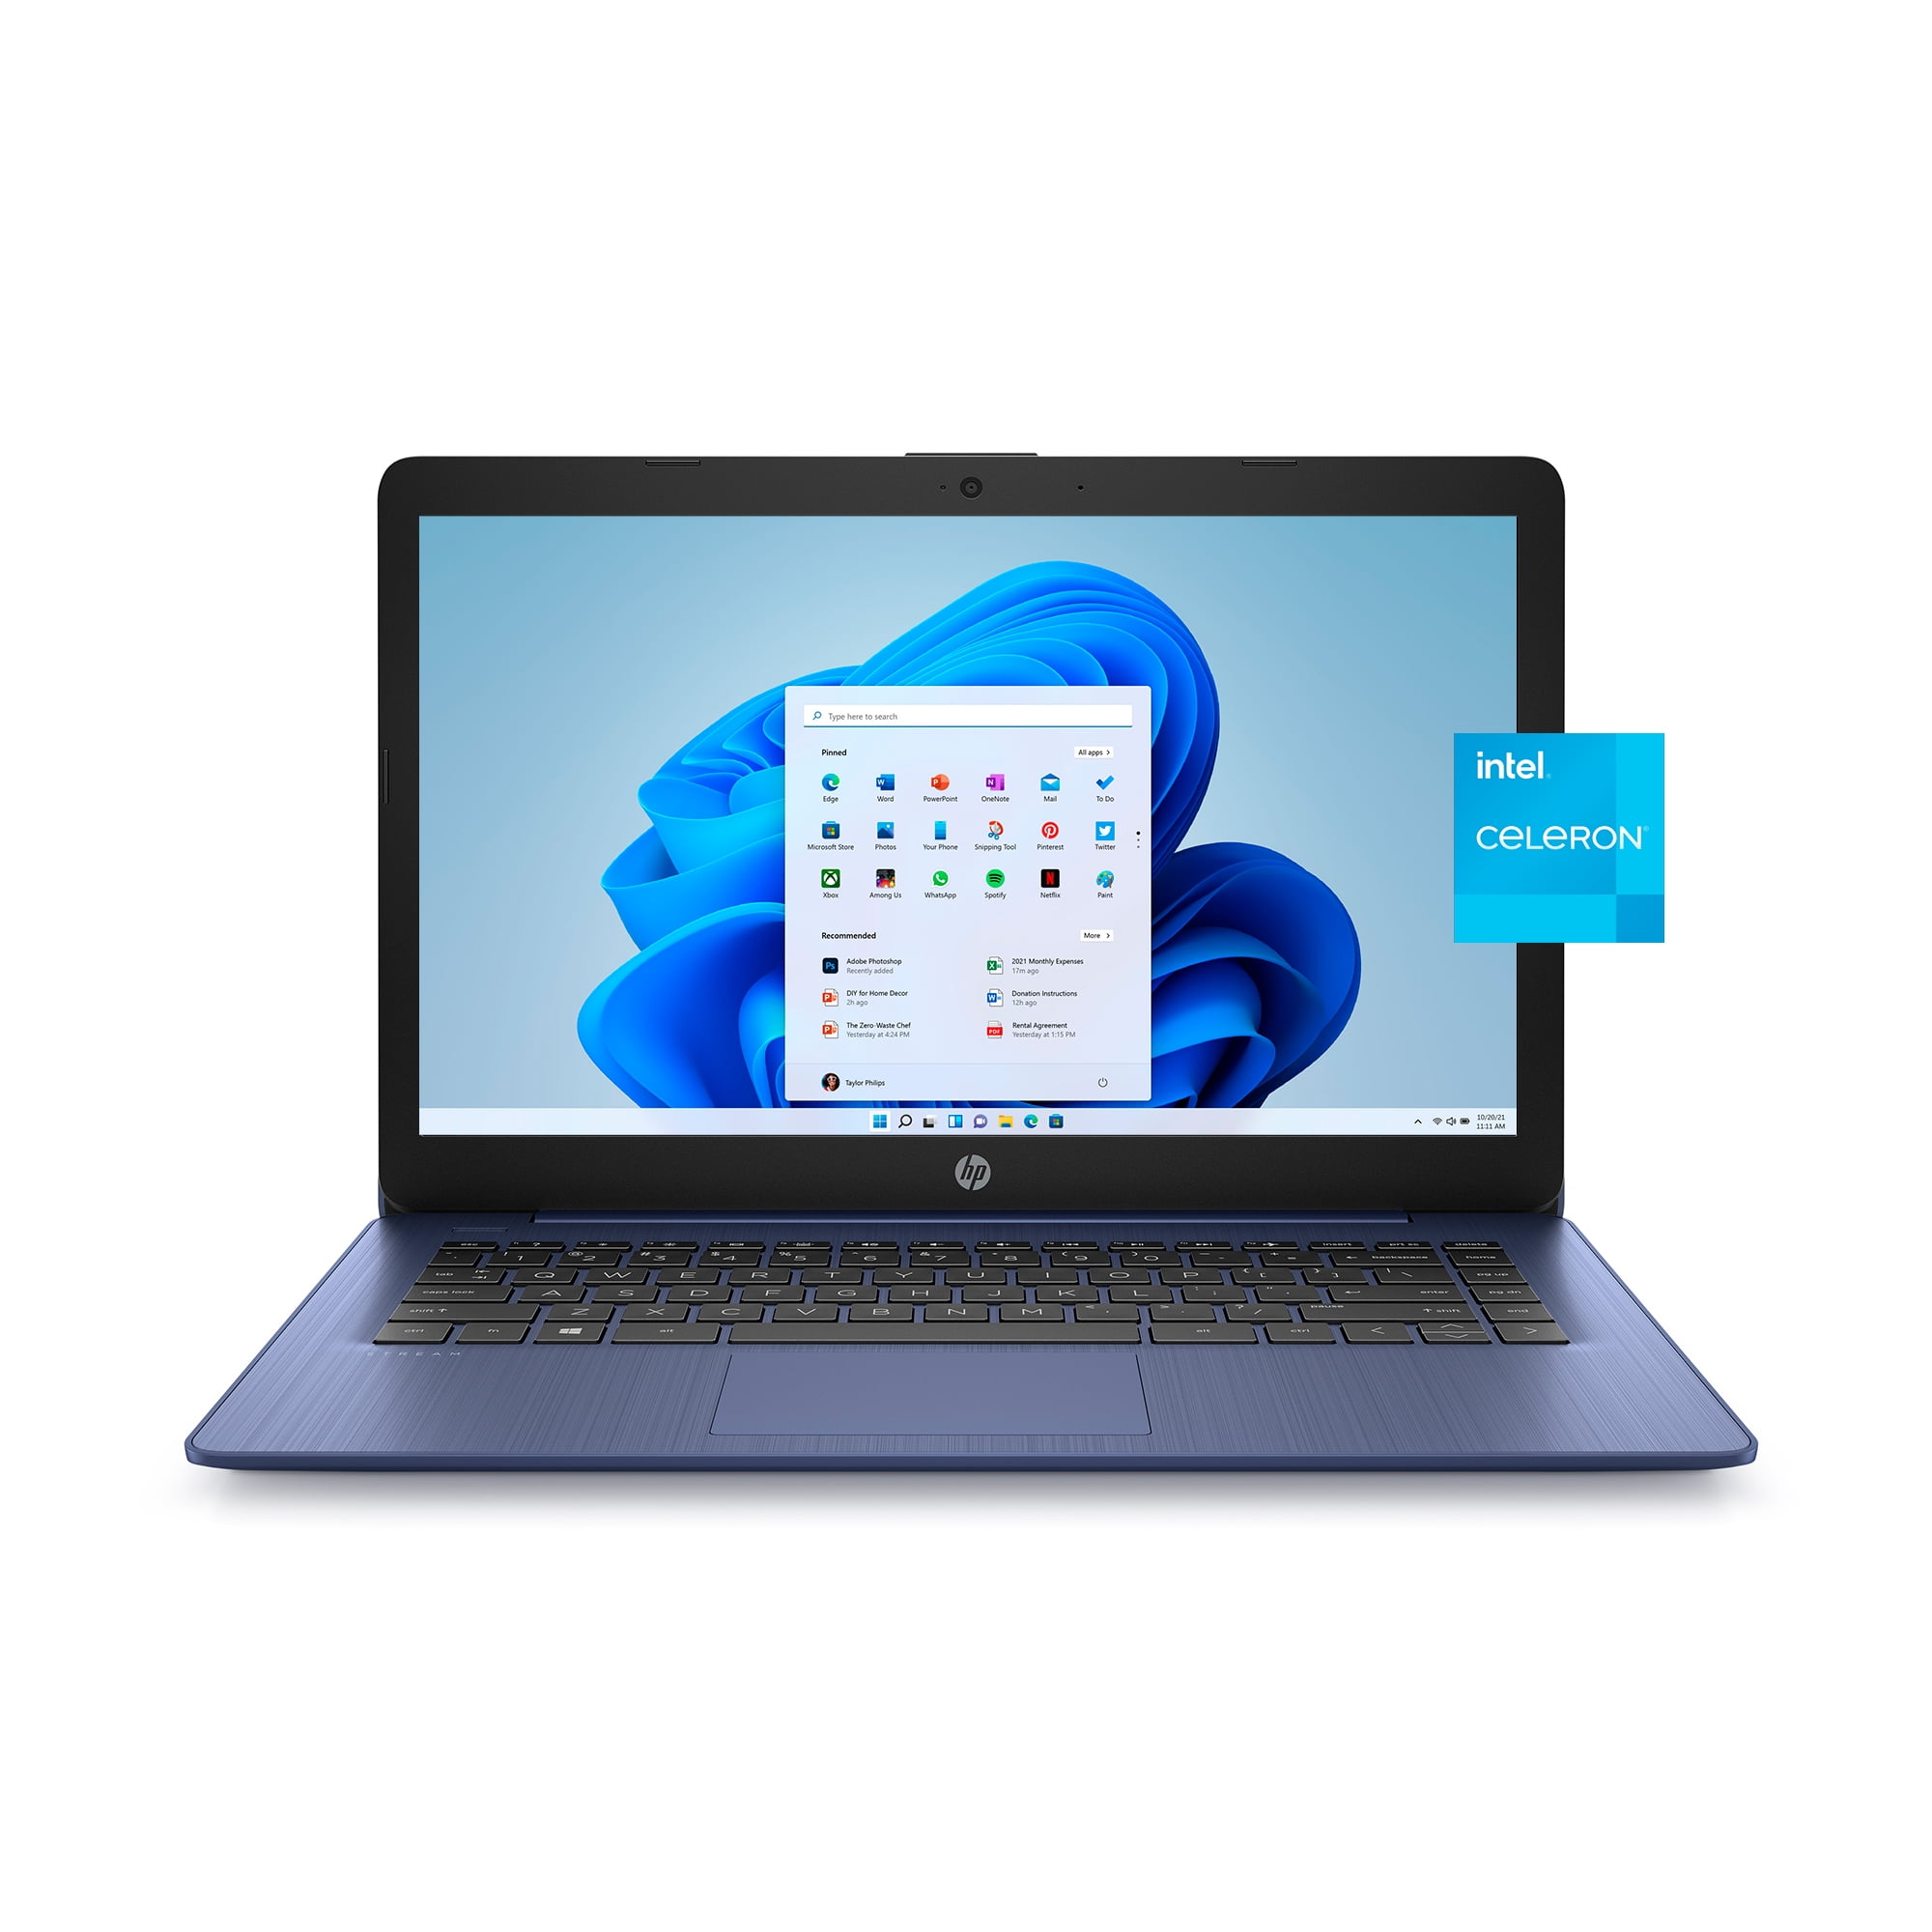 dier Immigratie Goed gevoel HP 14" PC Laptop, Intel Celeron N4000, 4GB RAM, 64GB HD, Windows 10S with 1  year Office 365, Blue, 14-cb171wm - Walmart.com